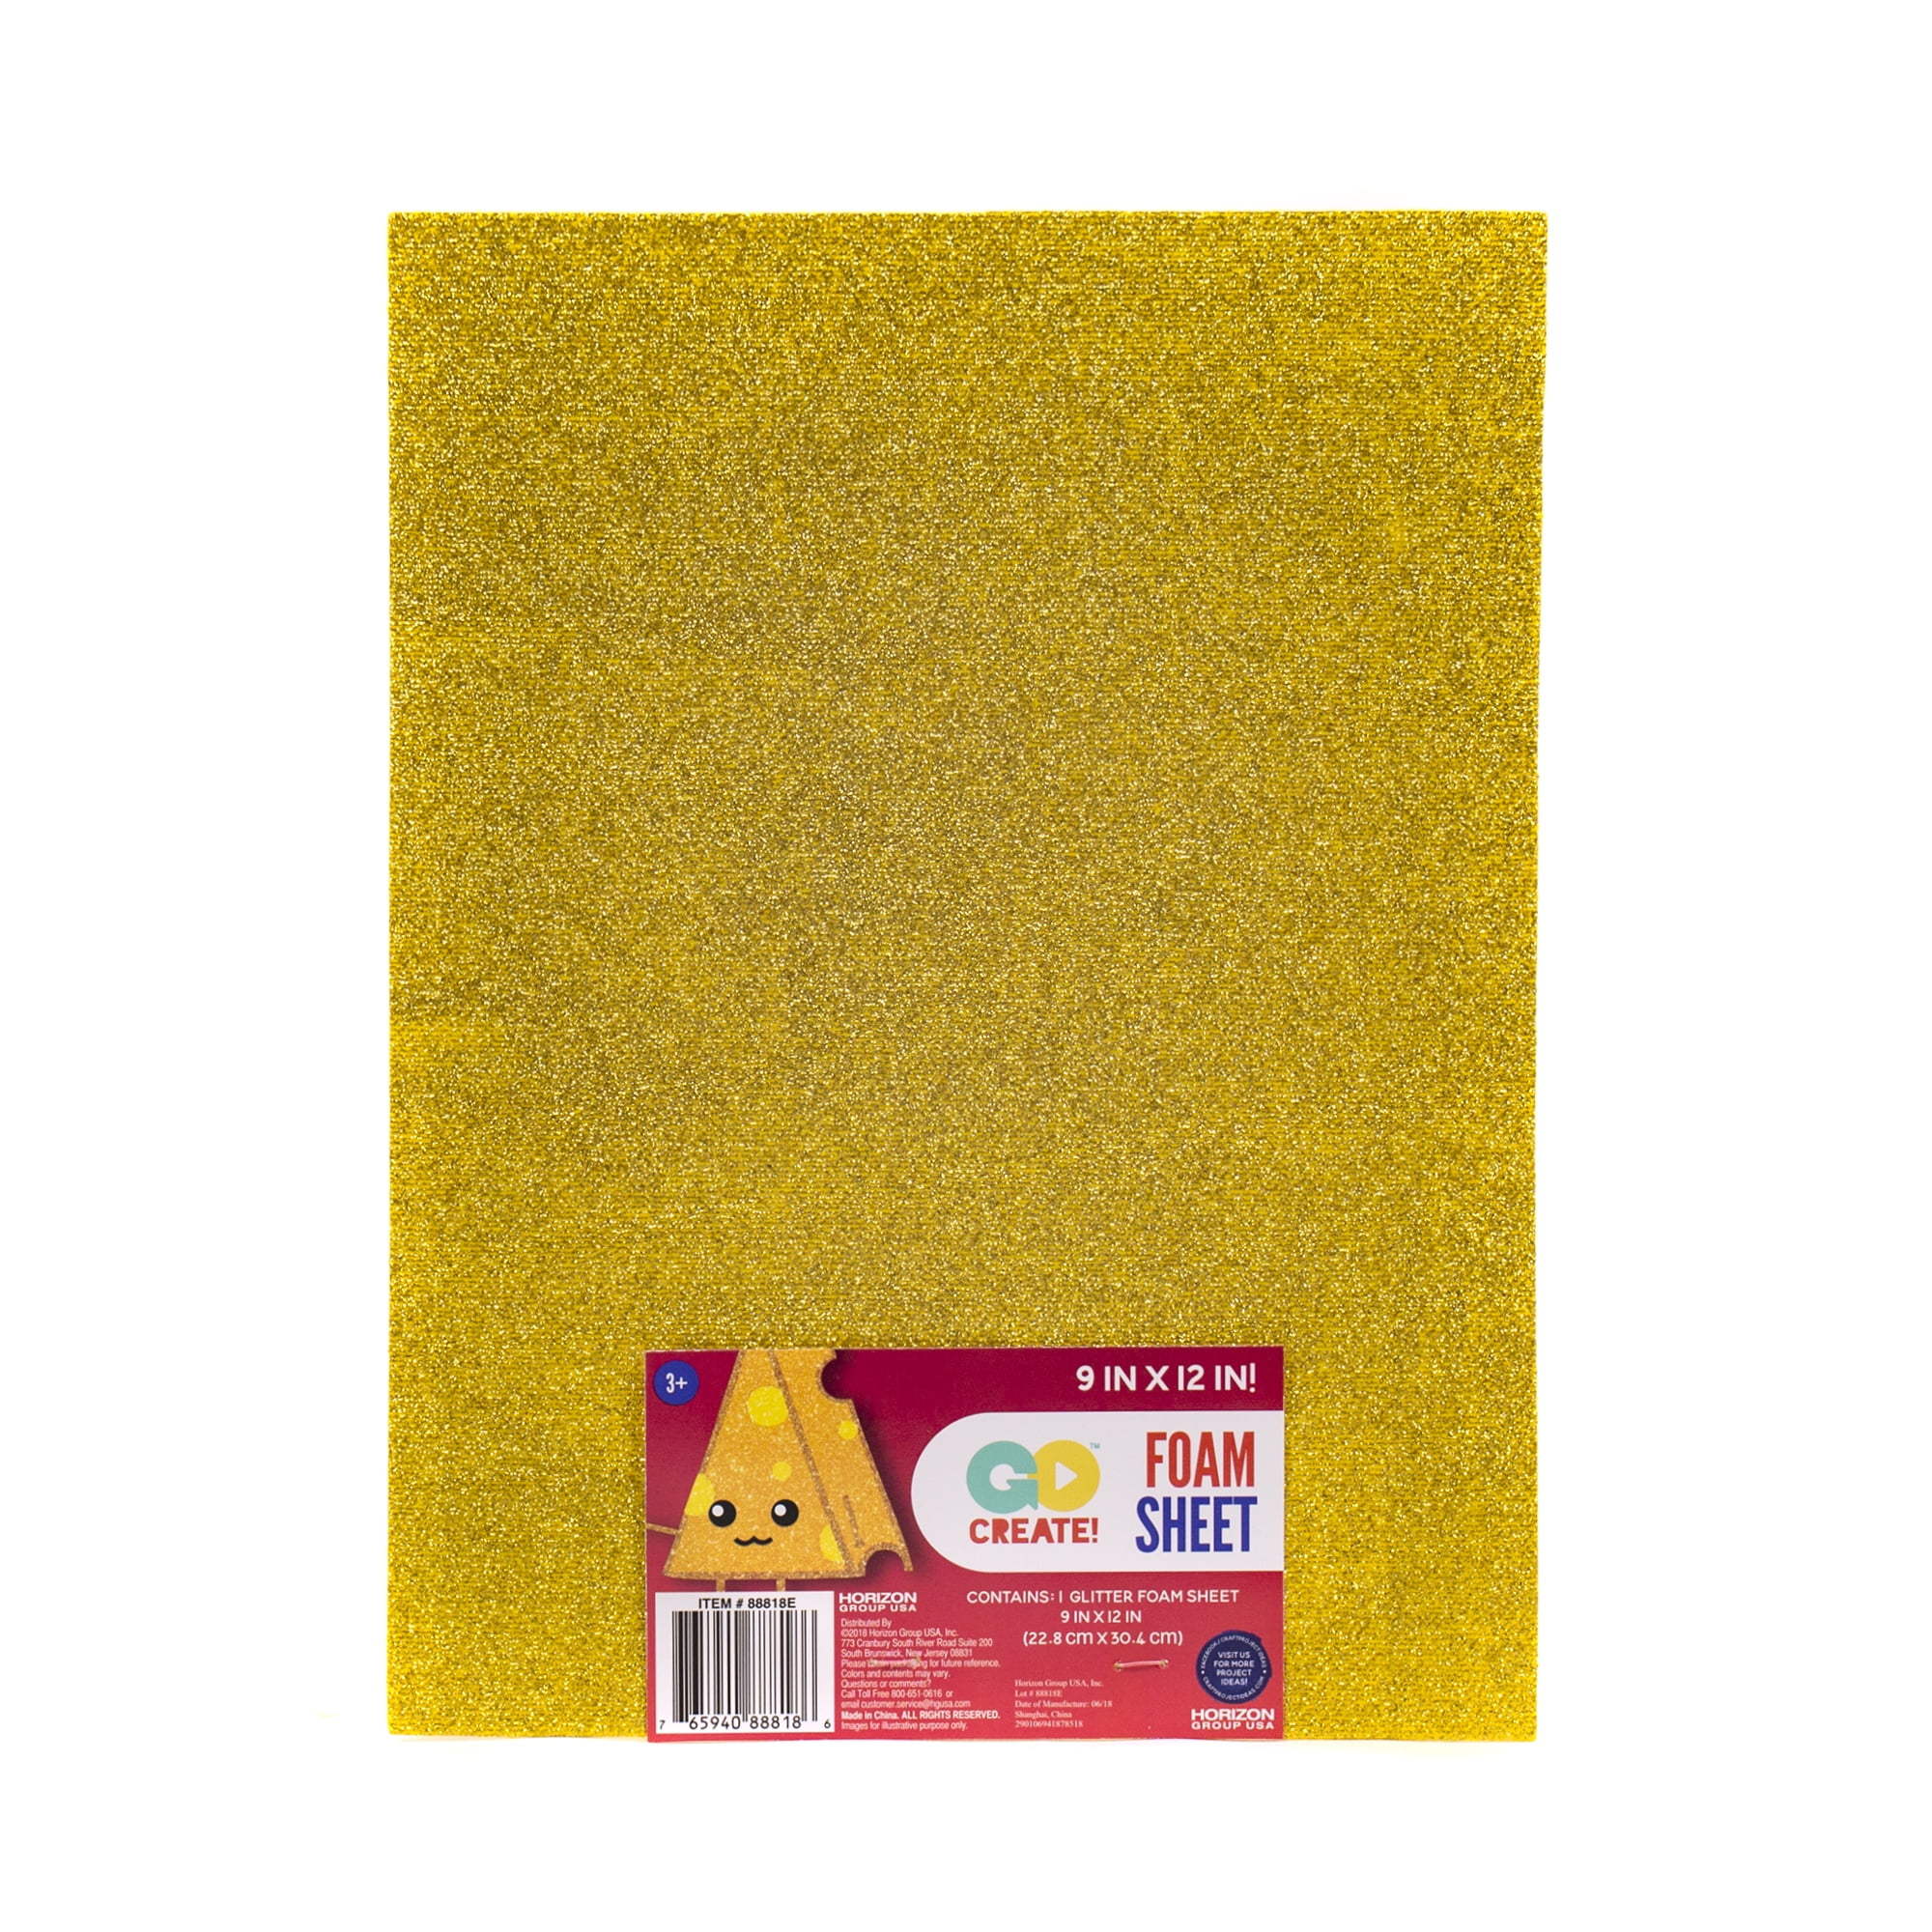 OUNONA Craft Sheets Craft Foam Paper Sheet Sponge Colored Thick Eva  Thinglitter Sheets Crafts Diy 